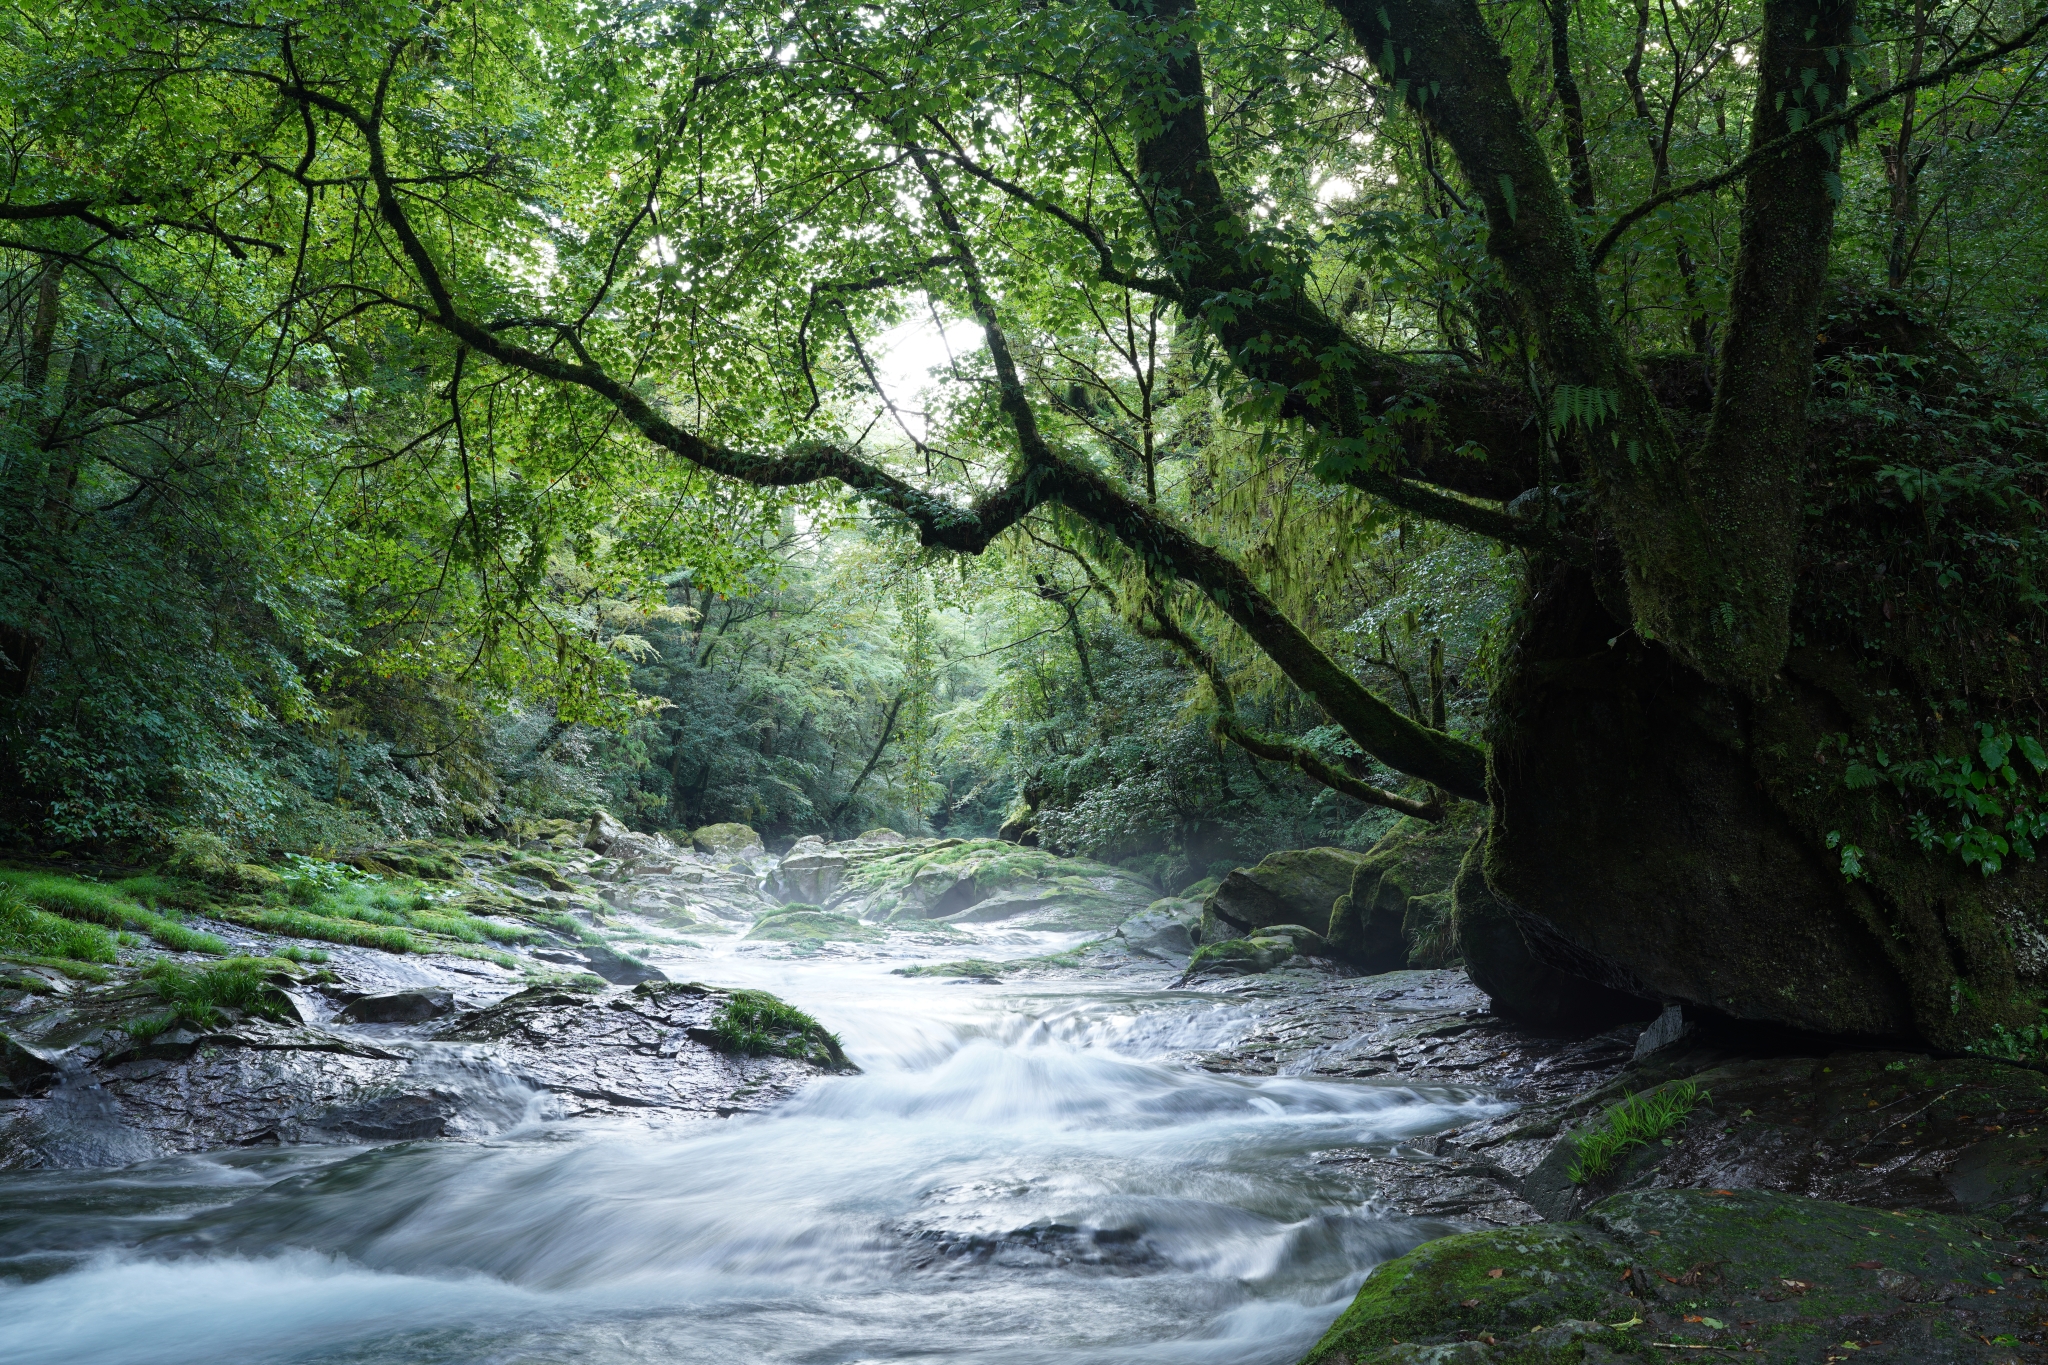 River running through lush green forest